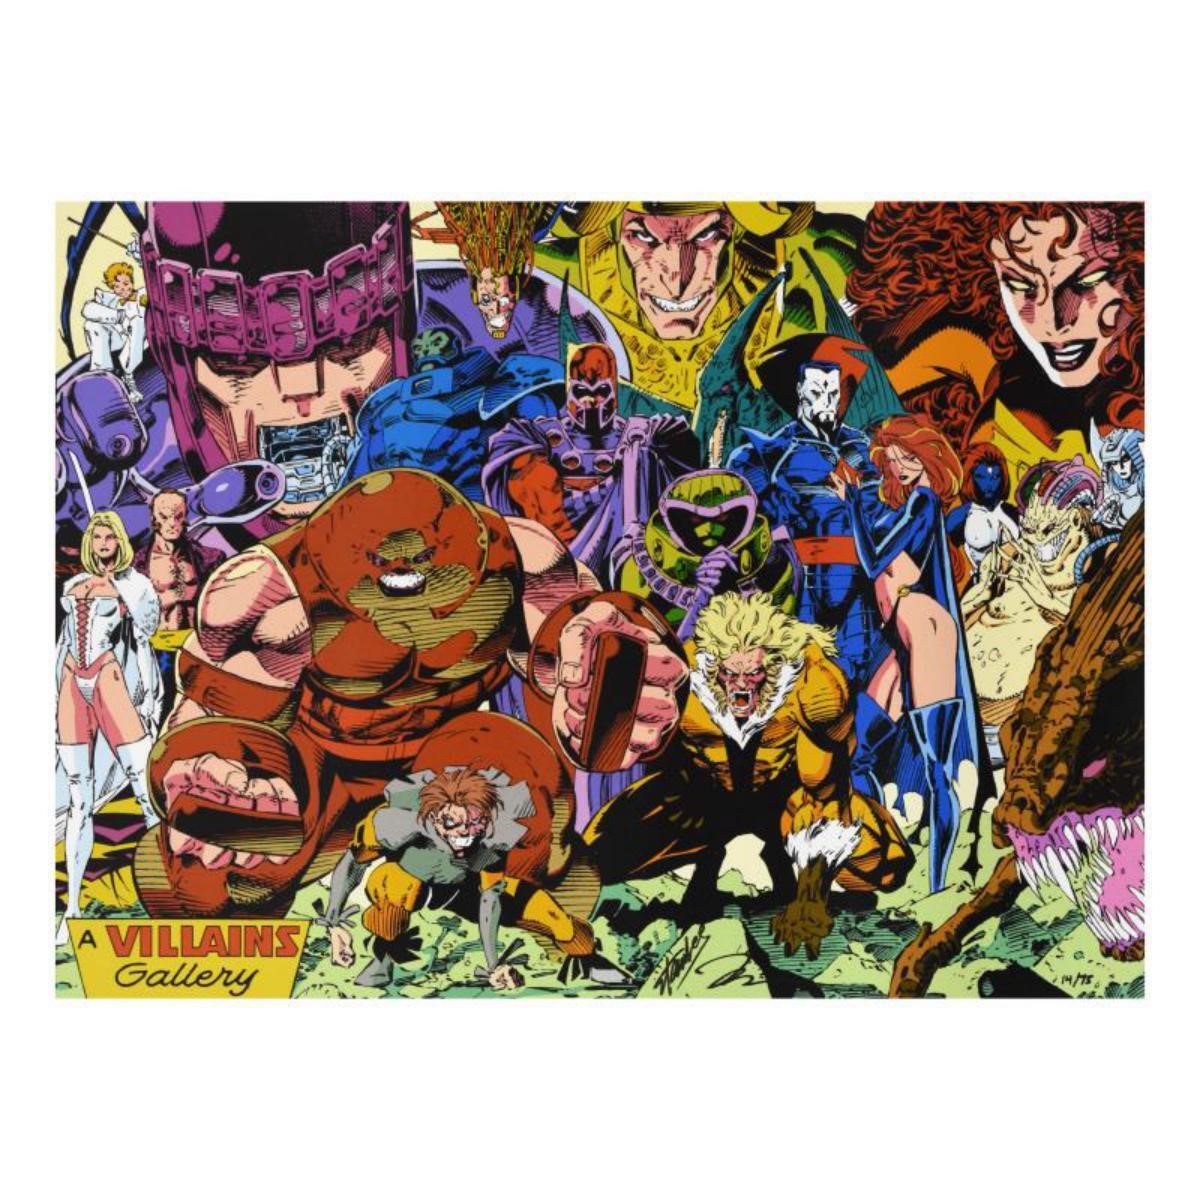 Marvel Comics, "X-Men Villains" Limited Edition on